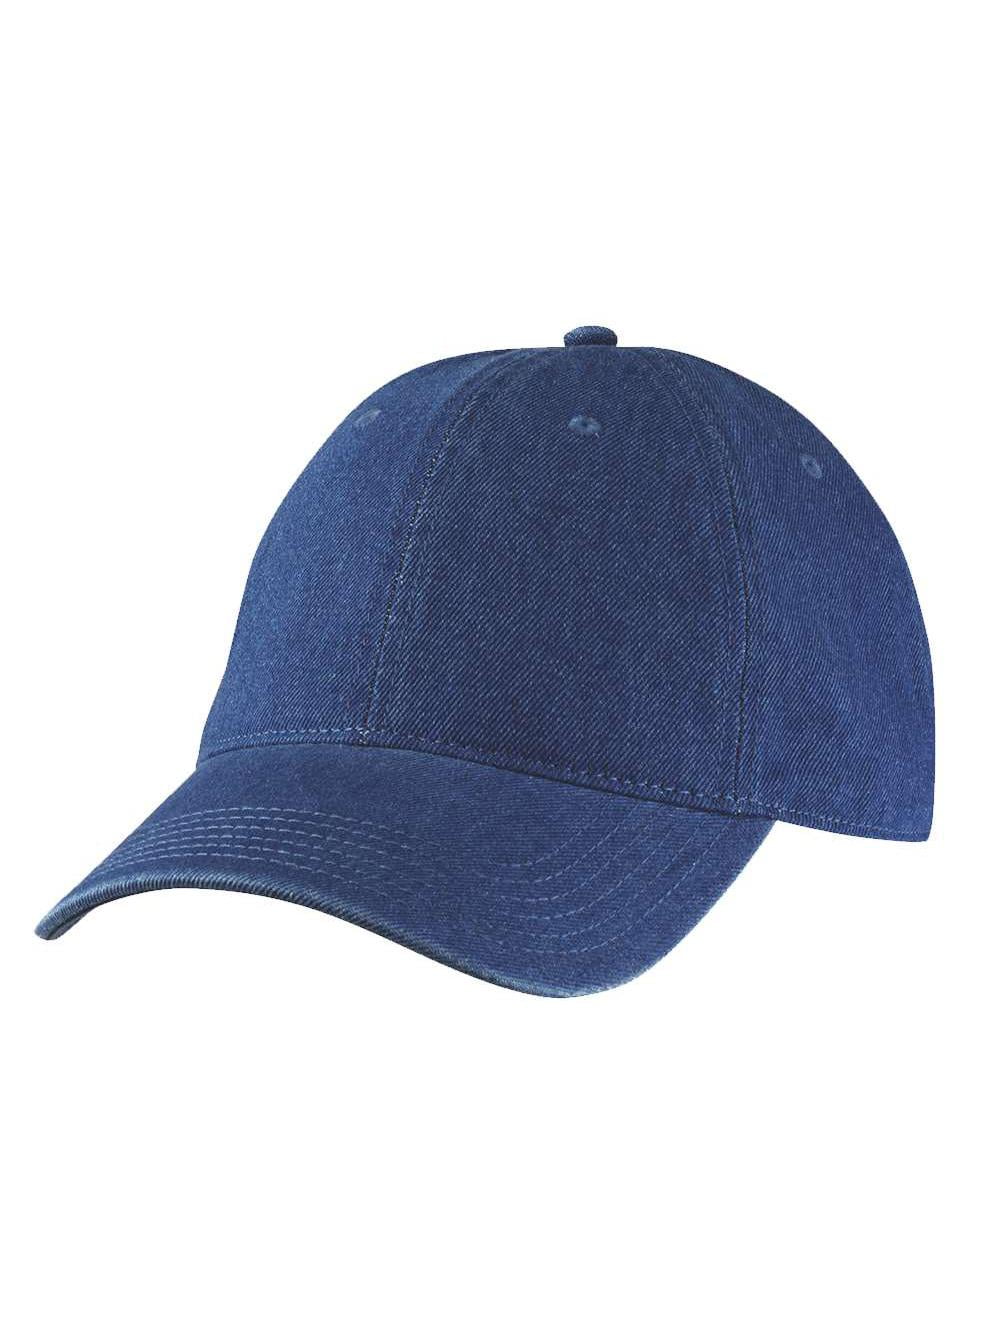 Russell Athletic - Snow Wash Denim Dad Hat - U073UHDXX - Denim Blue 